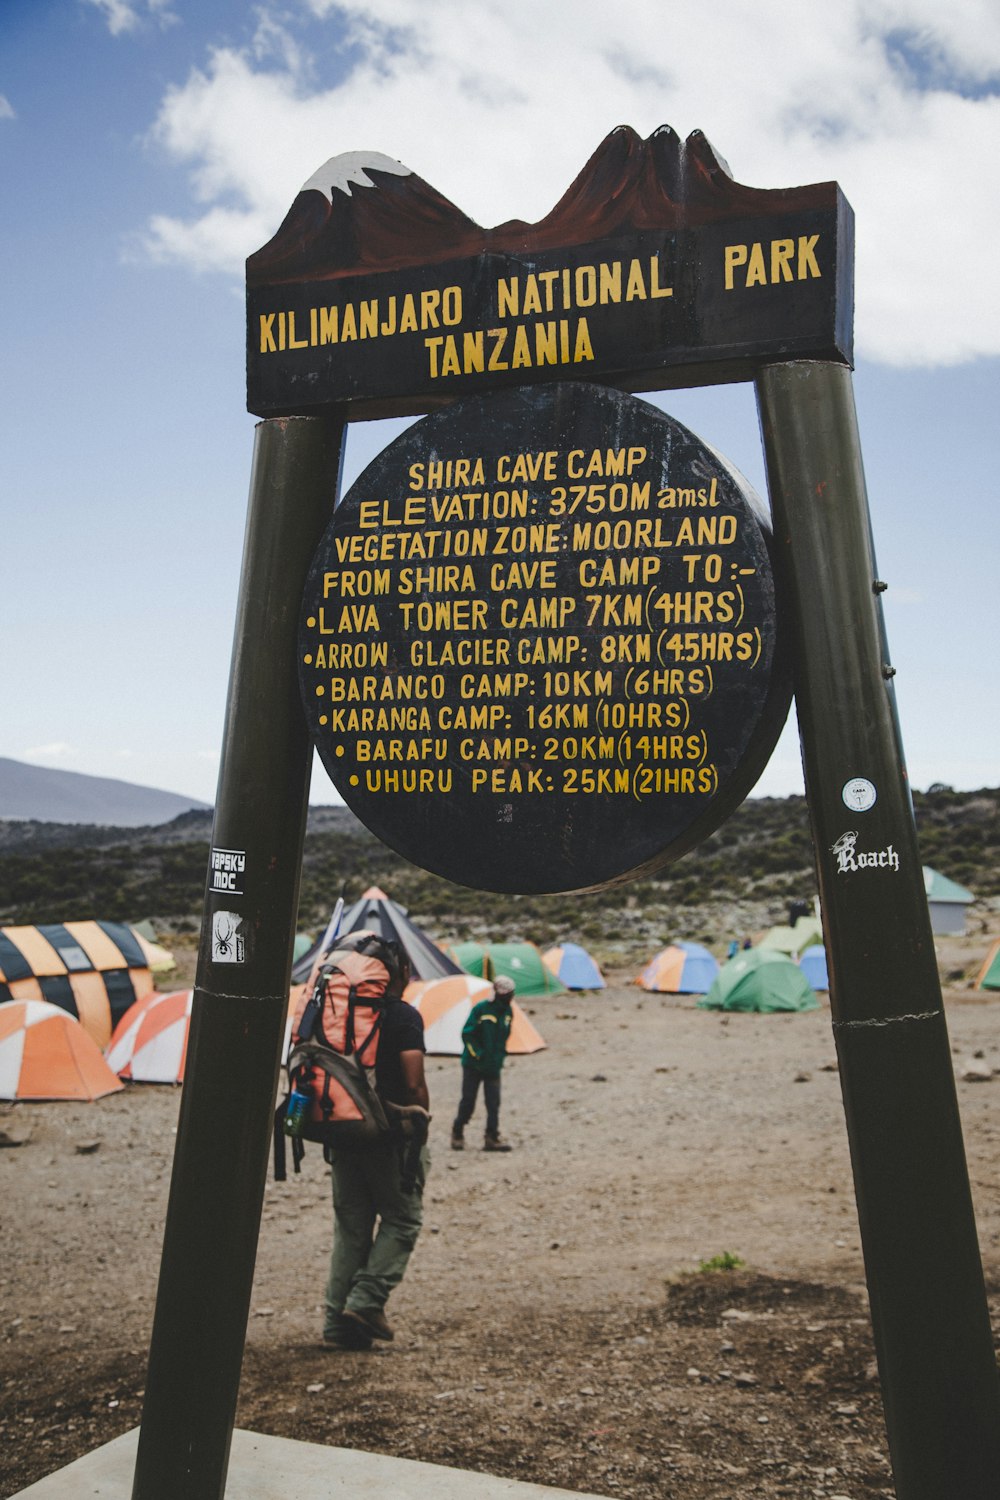 Kilimanjaro National Park Tanzania signage